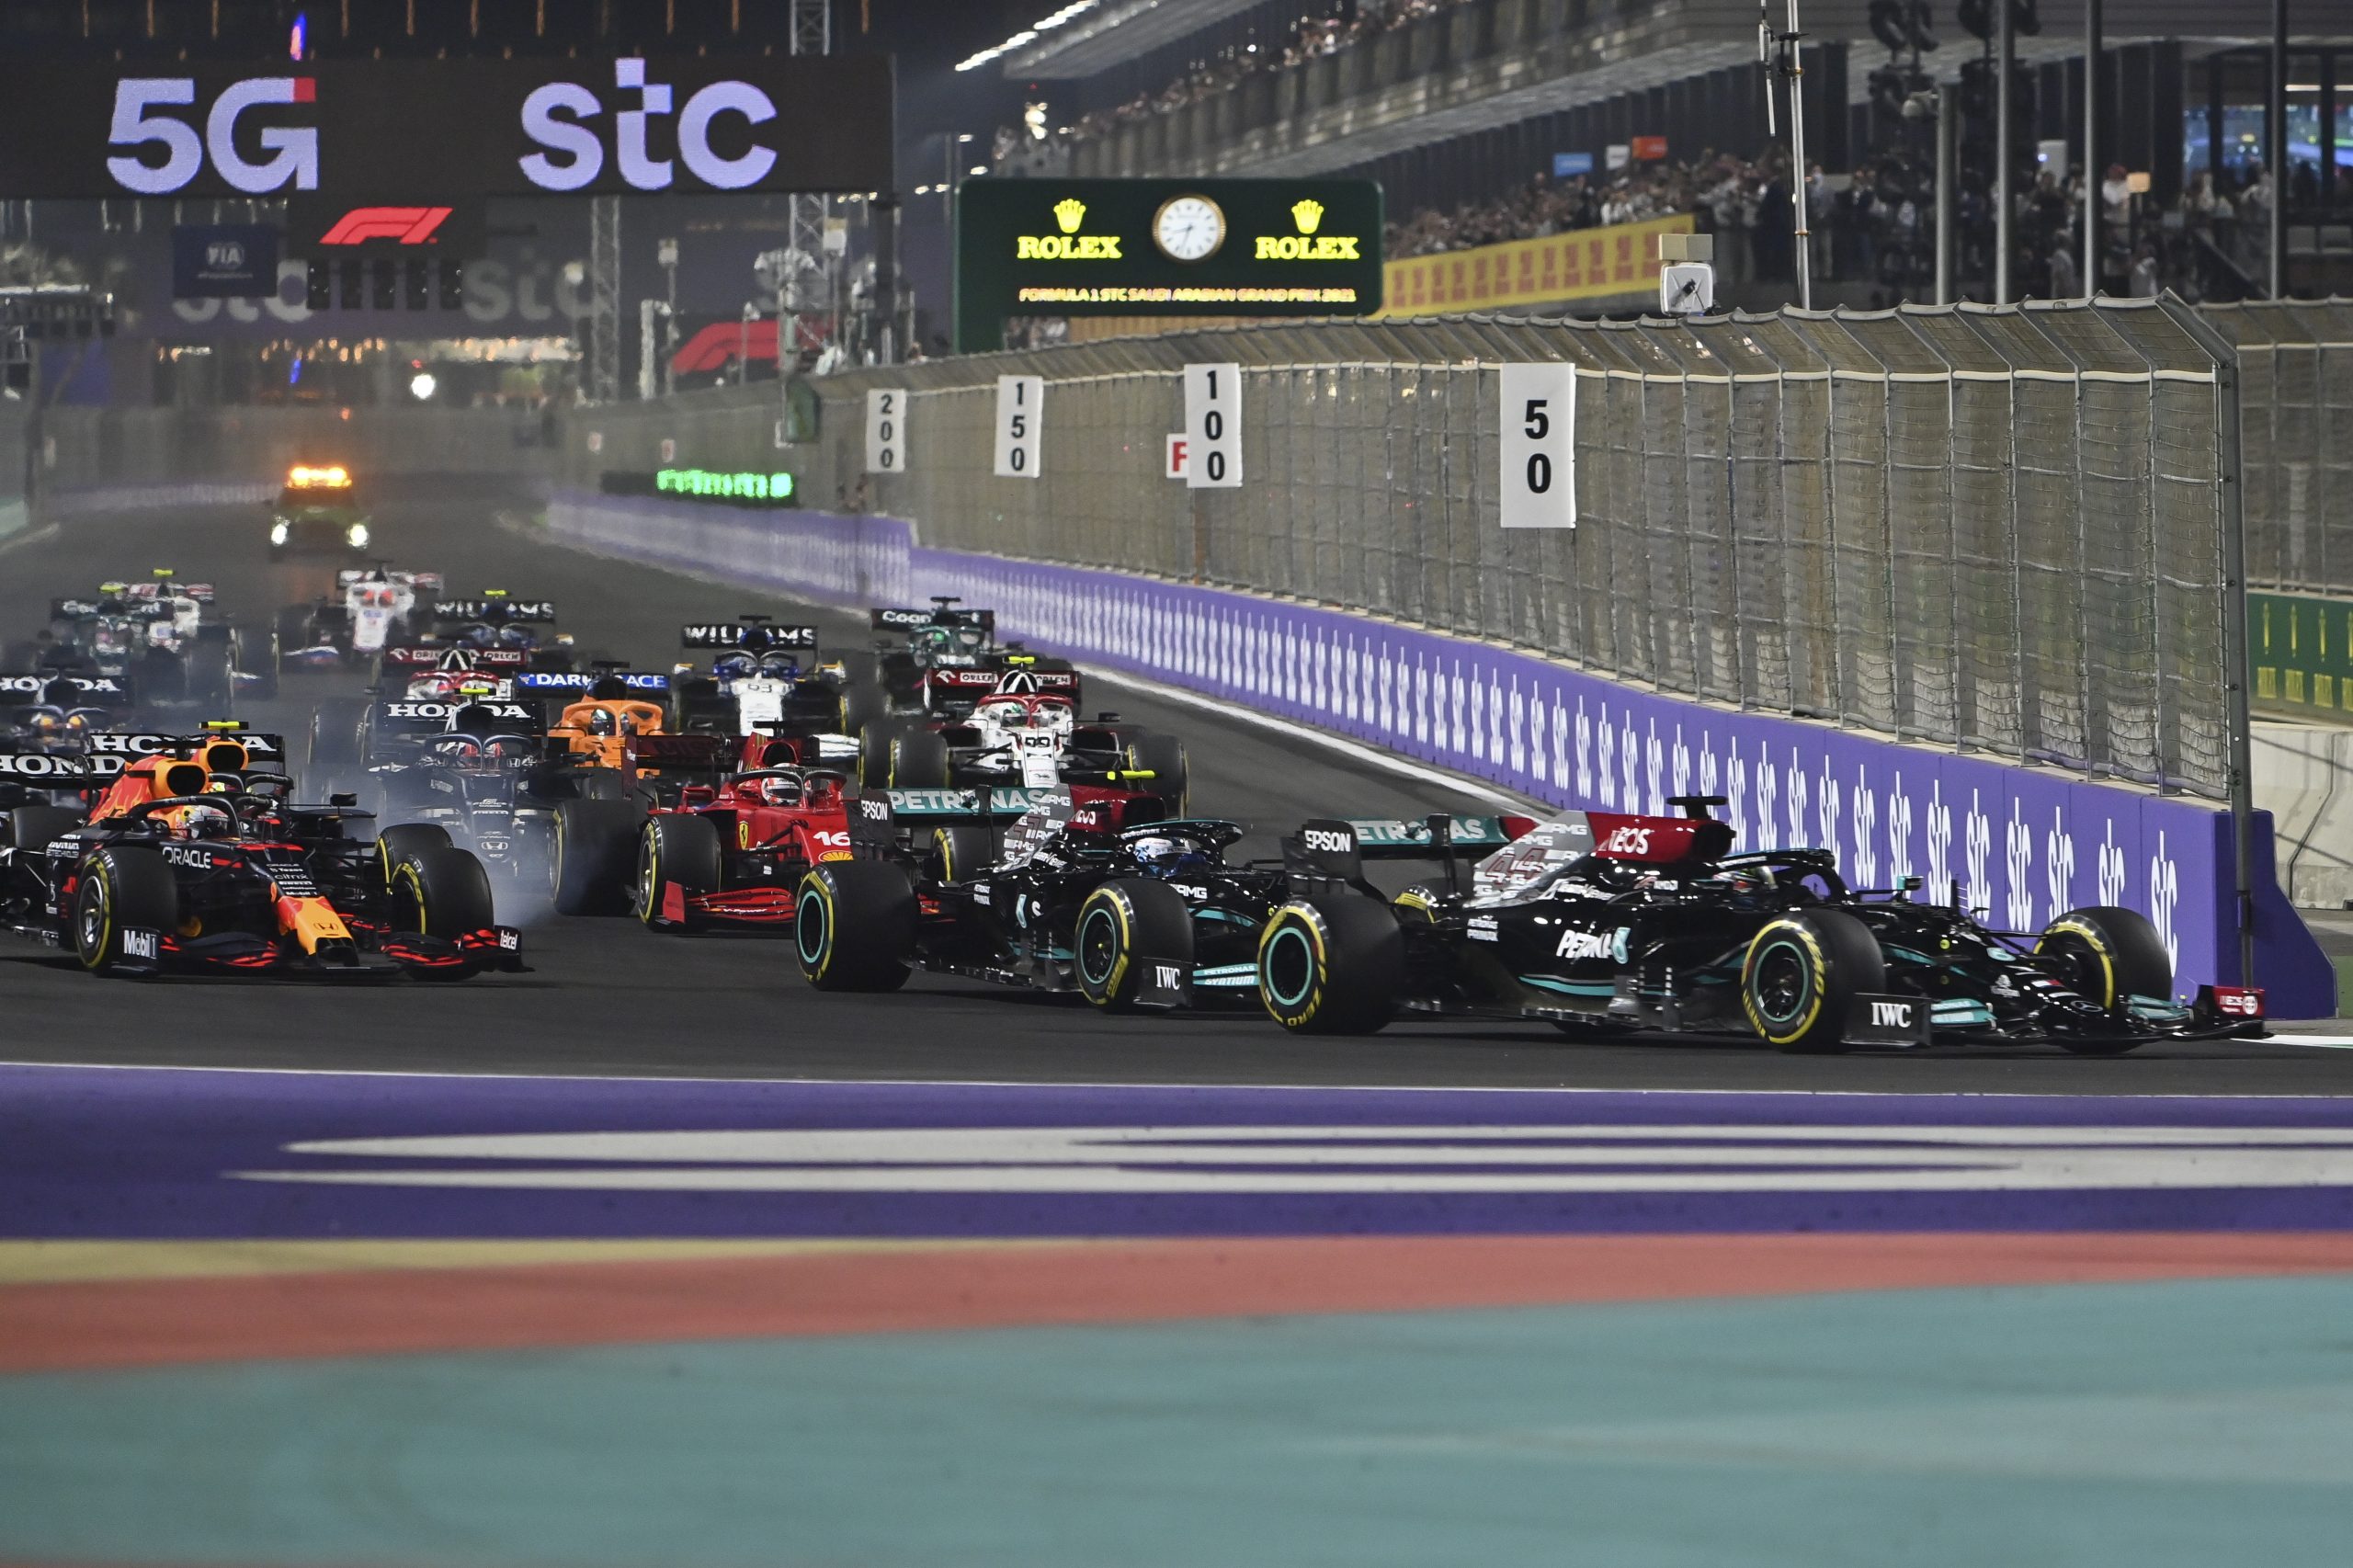 epa09624338 British Formula One driver Lewis Hamilton of Mercedes-AMG Petronas leads the pack of cars during the start of the inaugural 2021 Formula One Grand Prix of Saudi Arabia at the Jeddah Corniche Circuit in Jeddah, Saudi Arabia, 05 December 2021.  EPA/STR